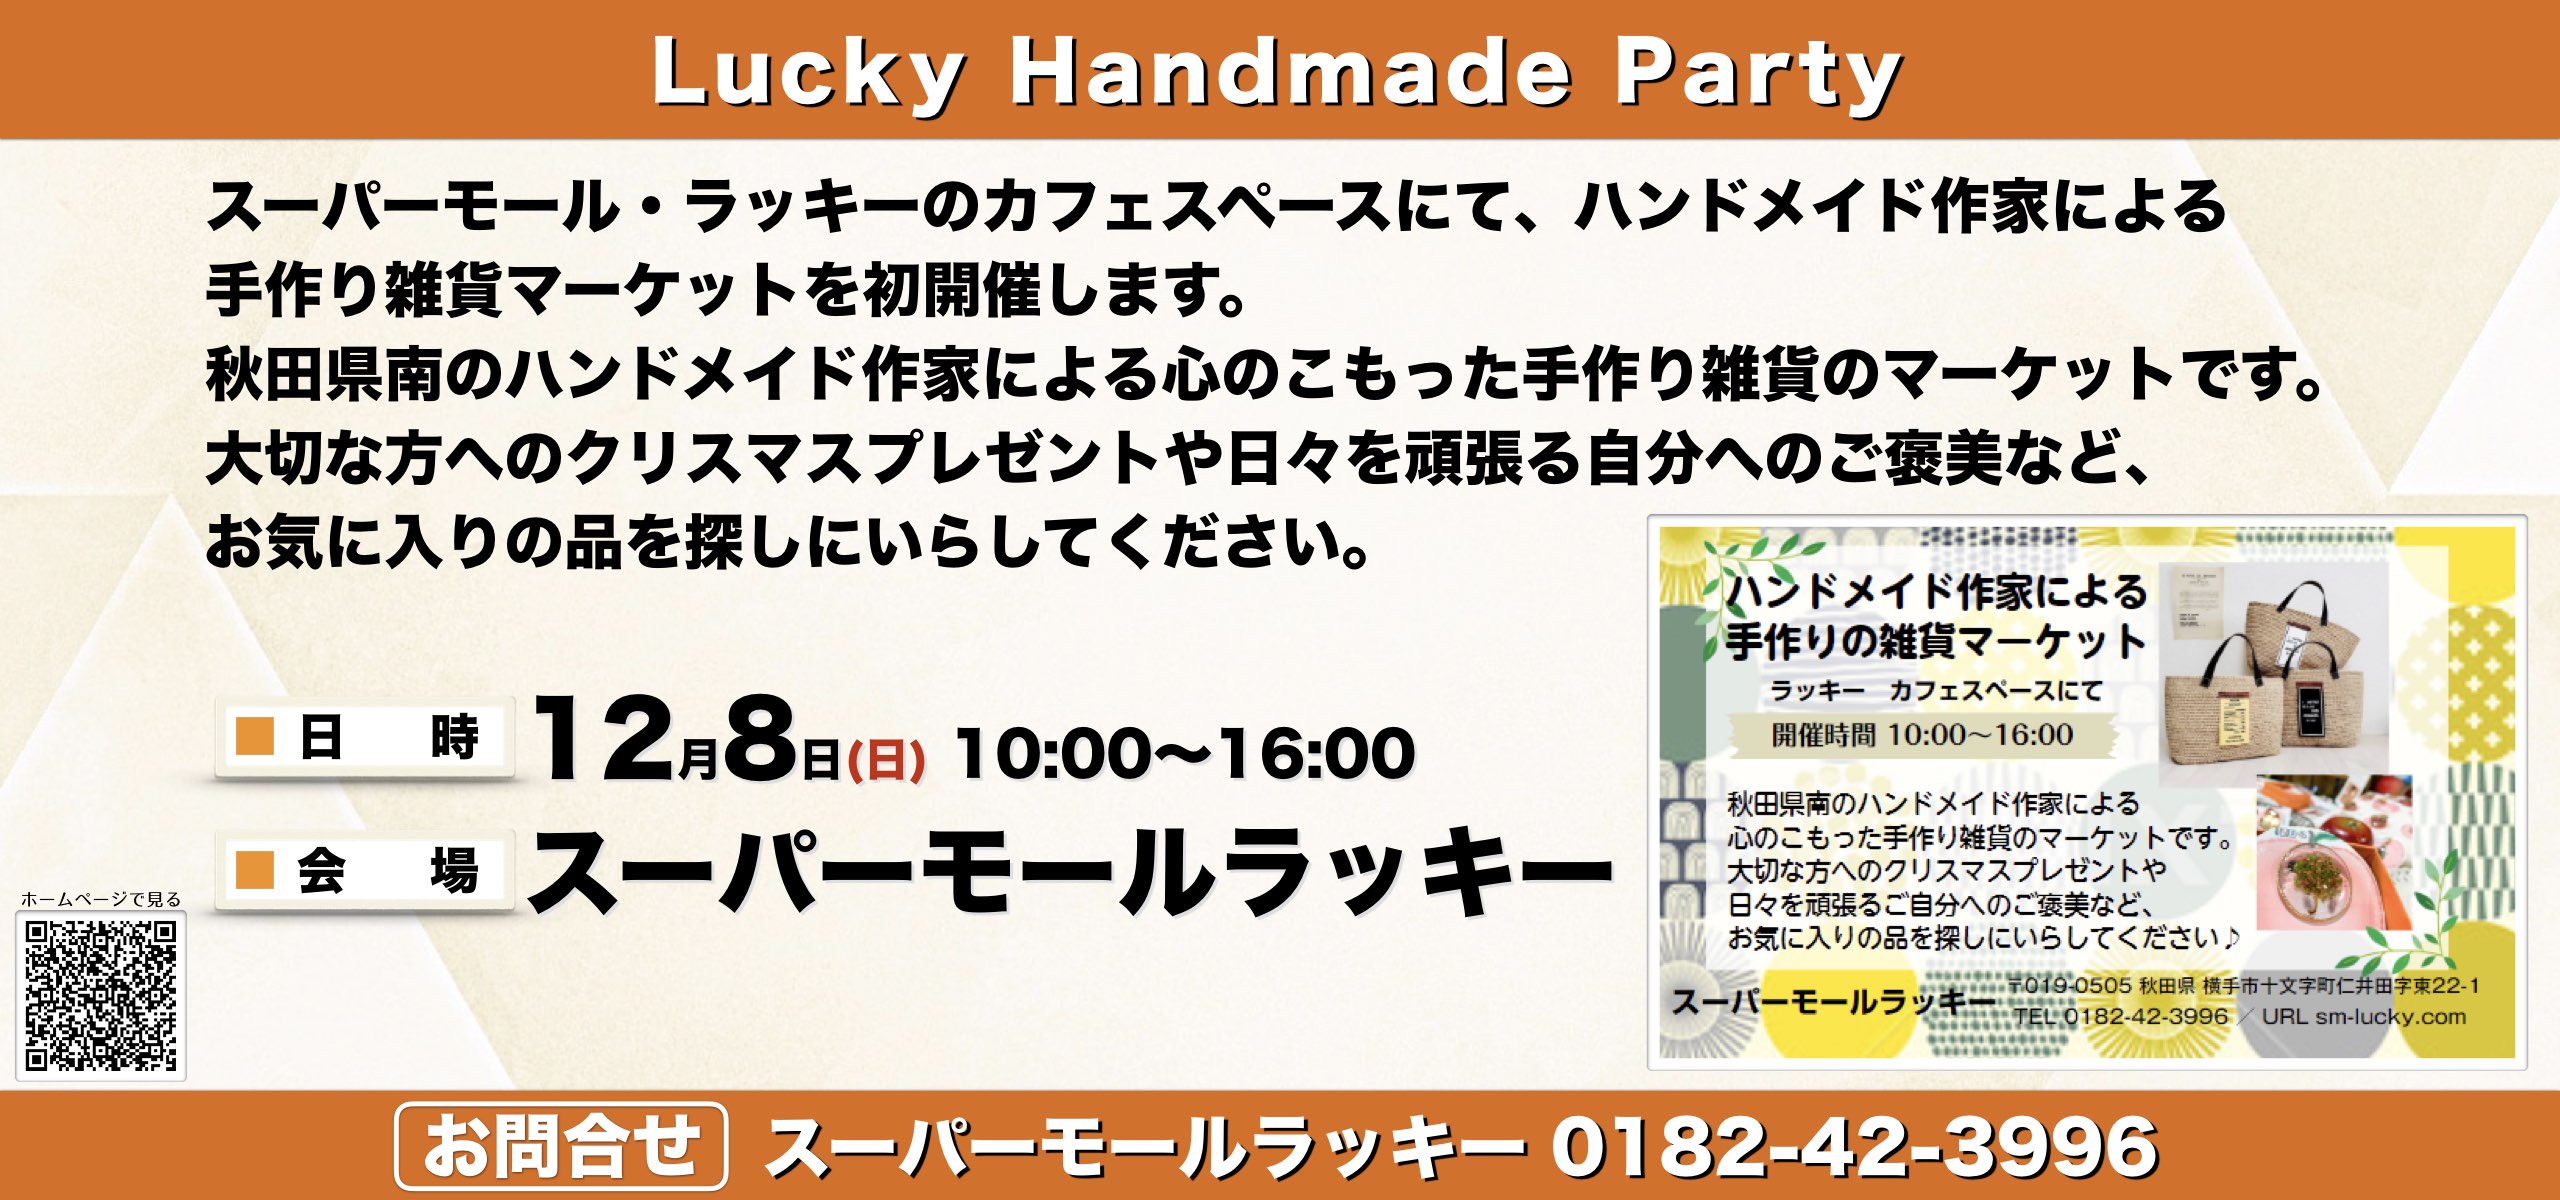 Lucky Handmade Party